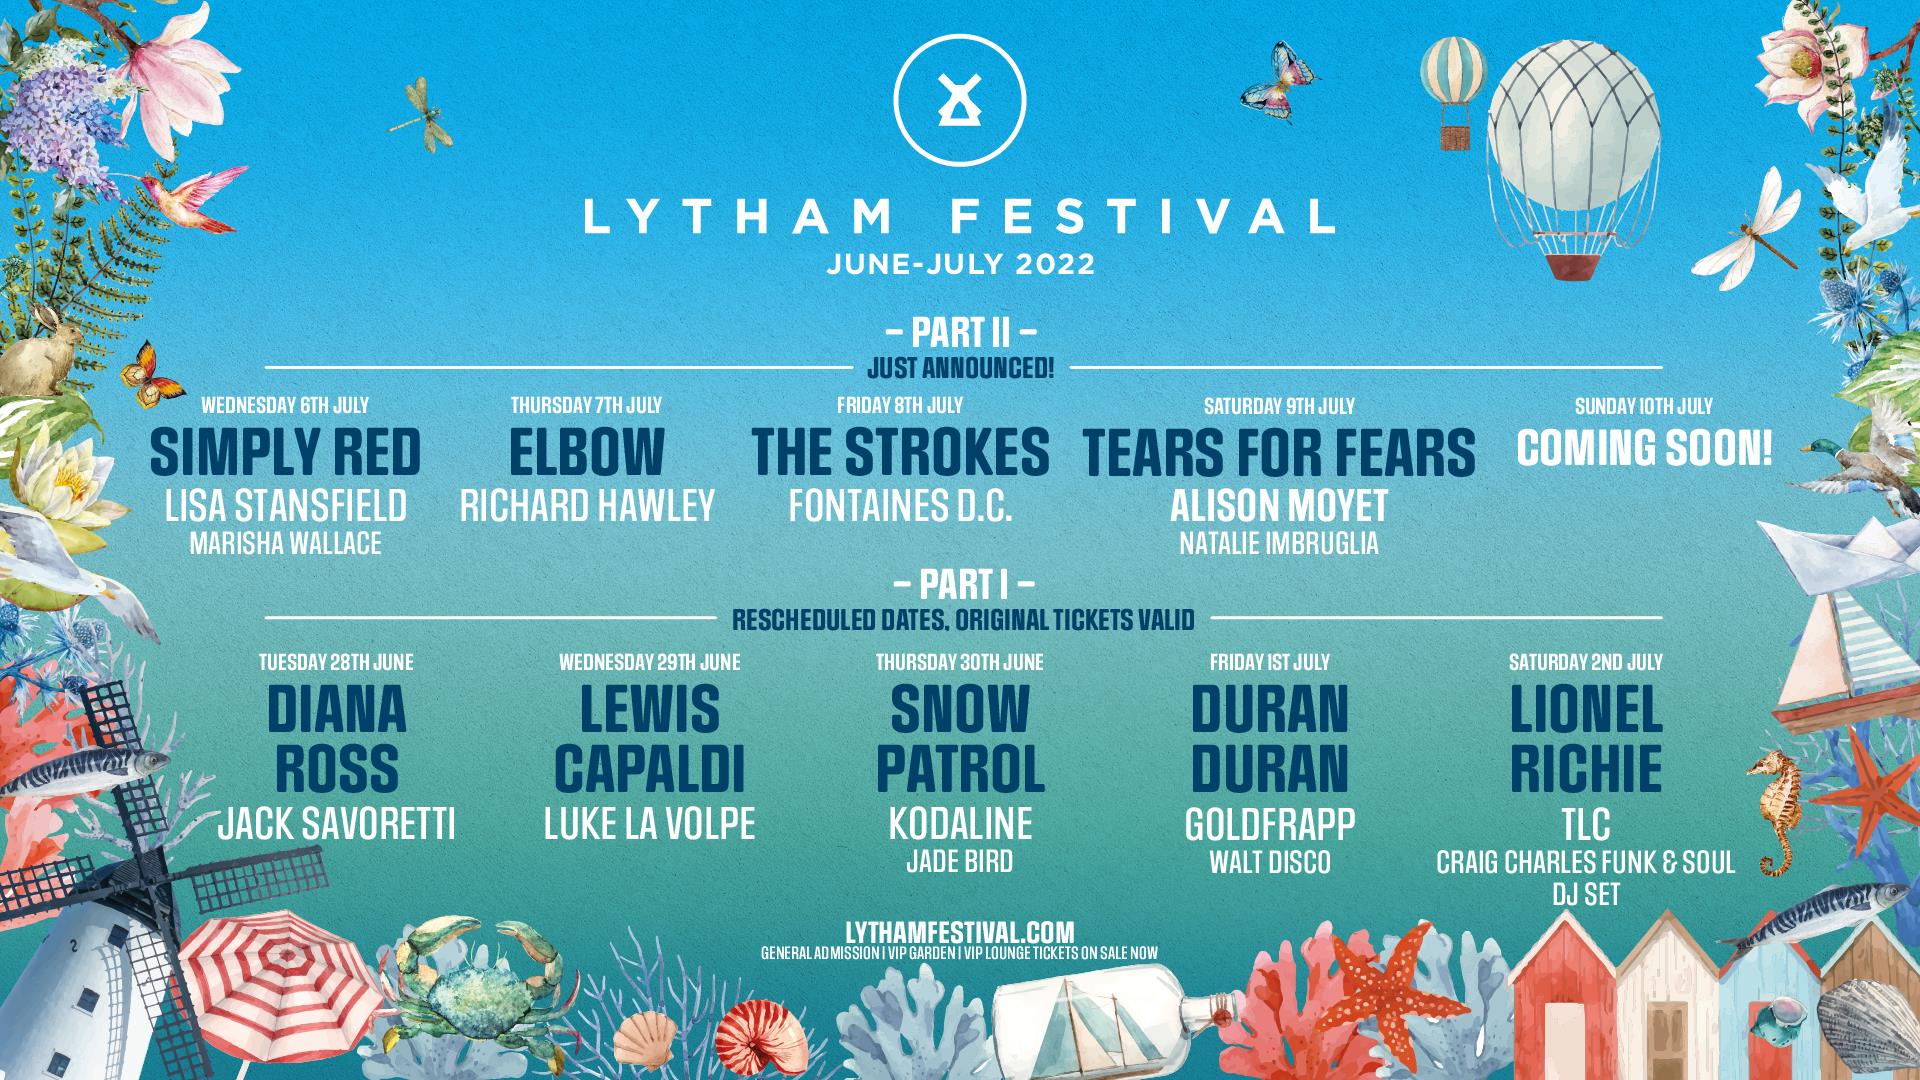 Lytham Festival 2022 – Lewis Capaldi - Lowther Pavilion